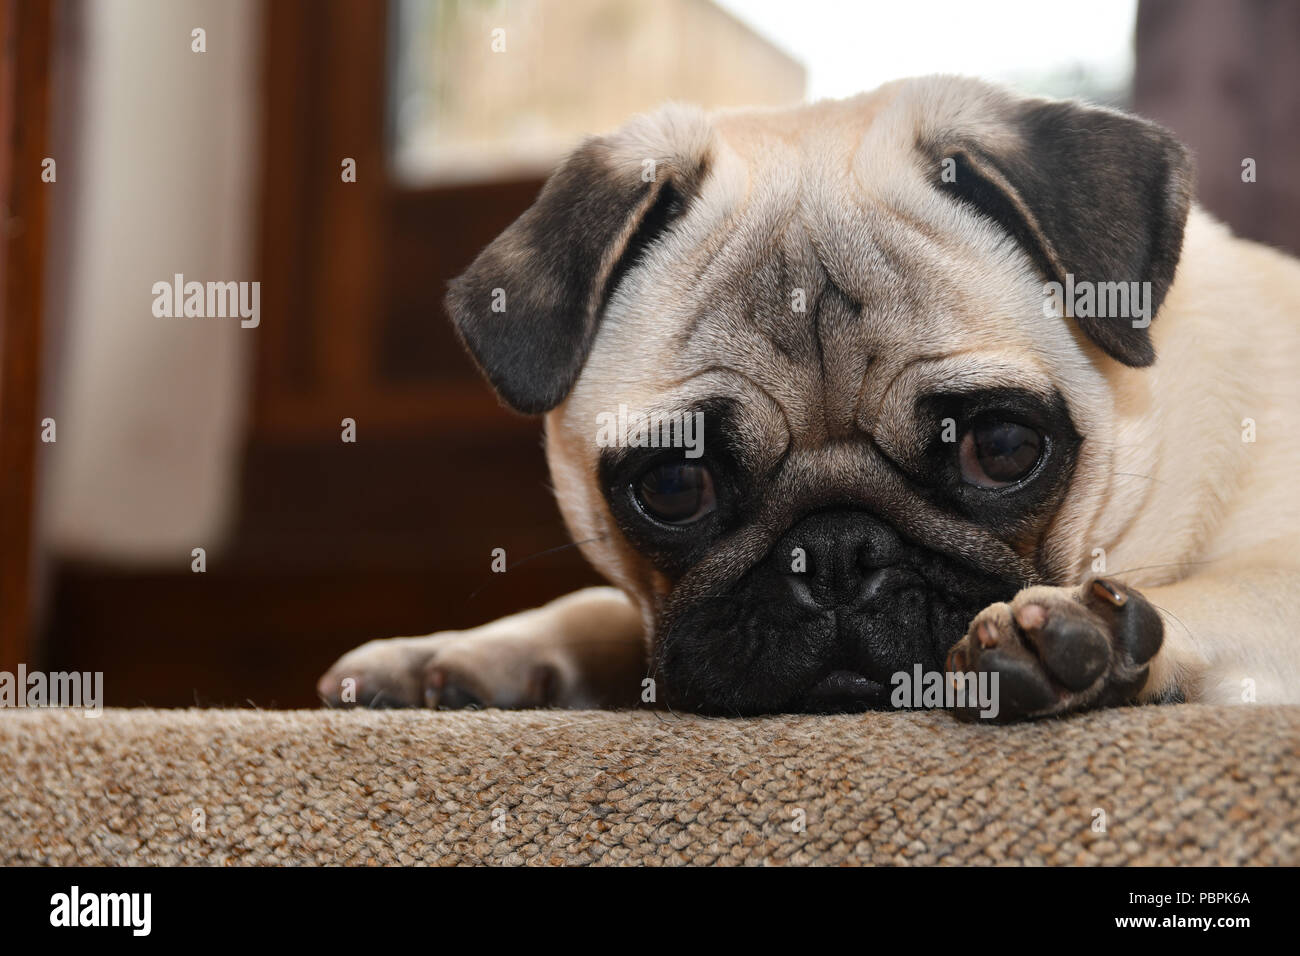 Pug resting head on carpet looking sad Stock Photo